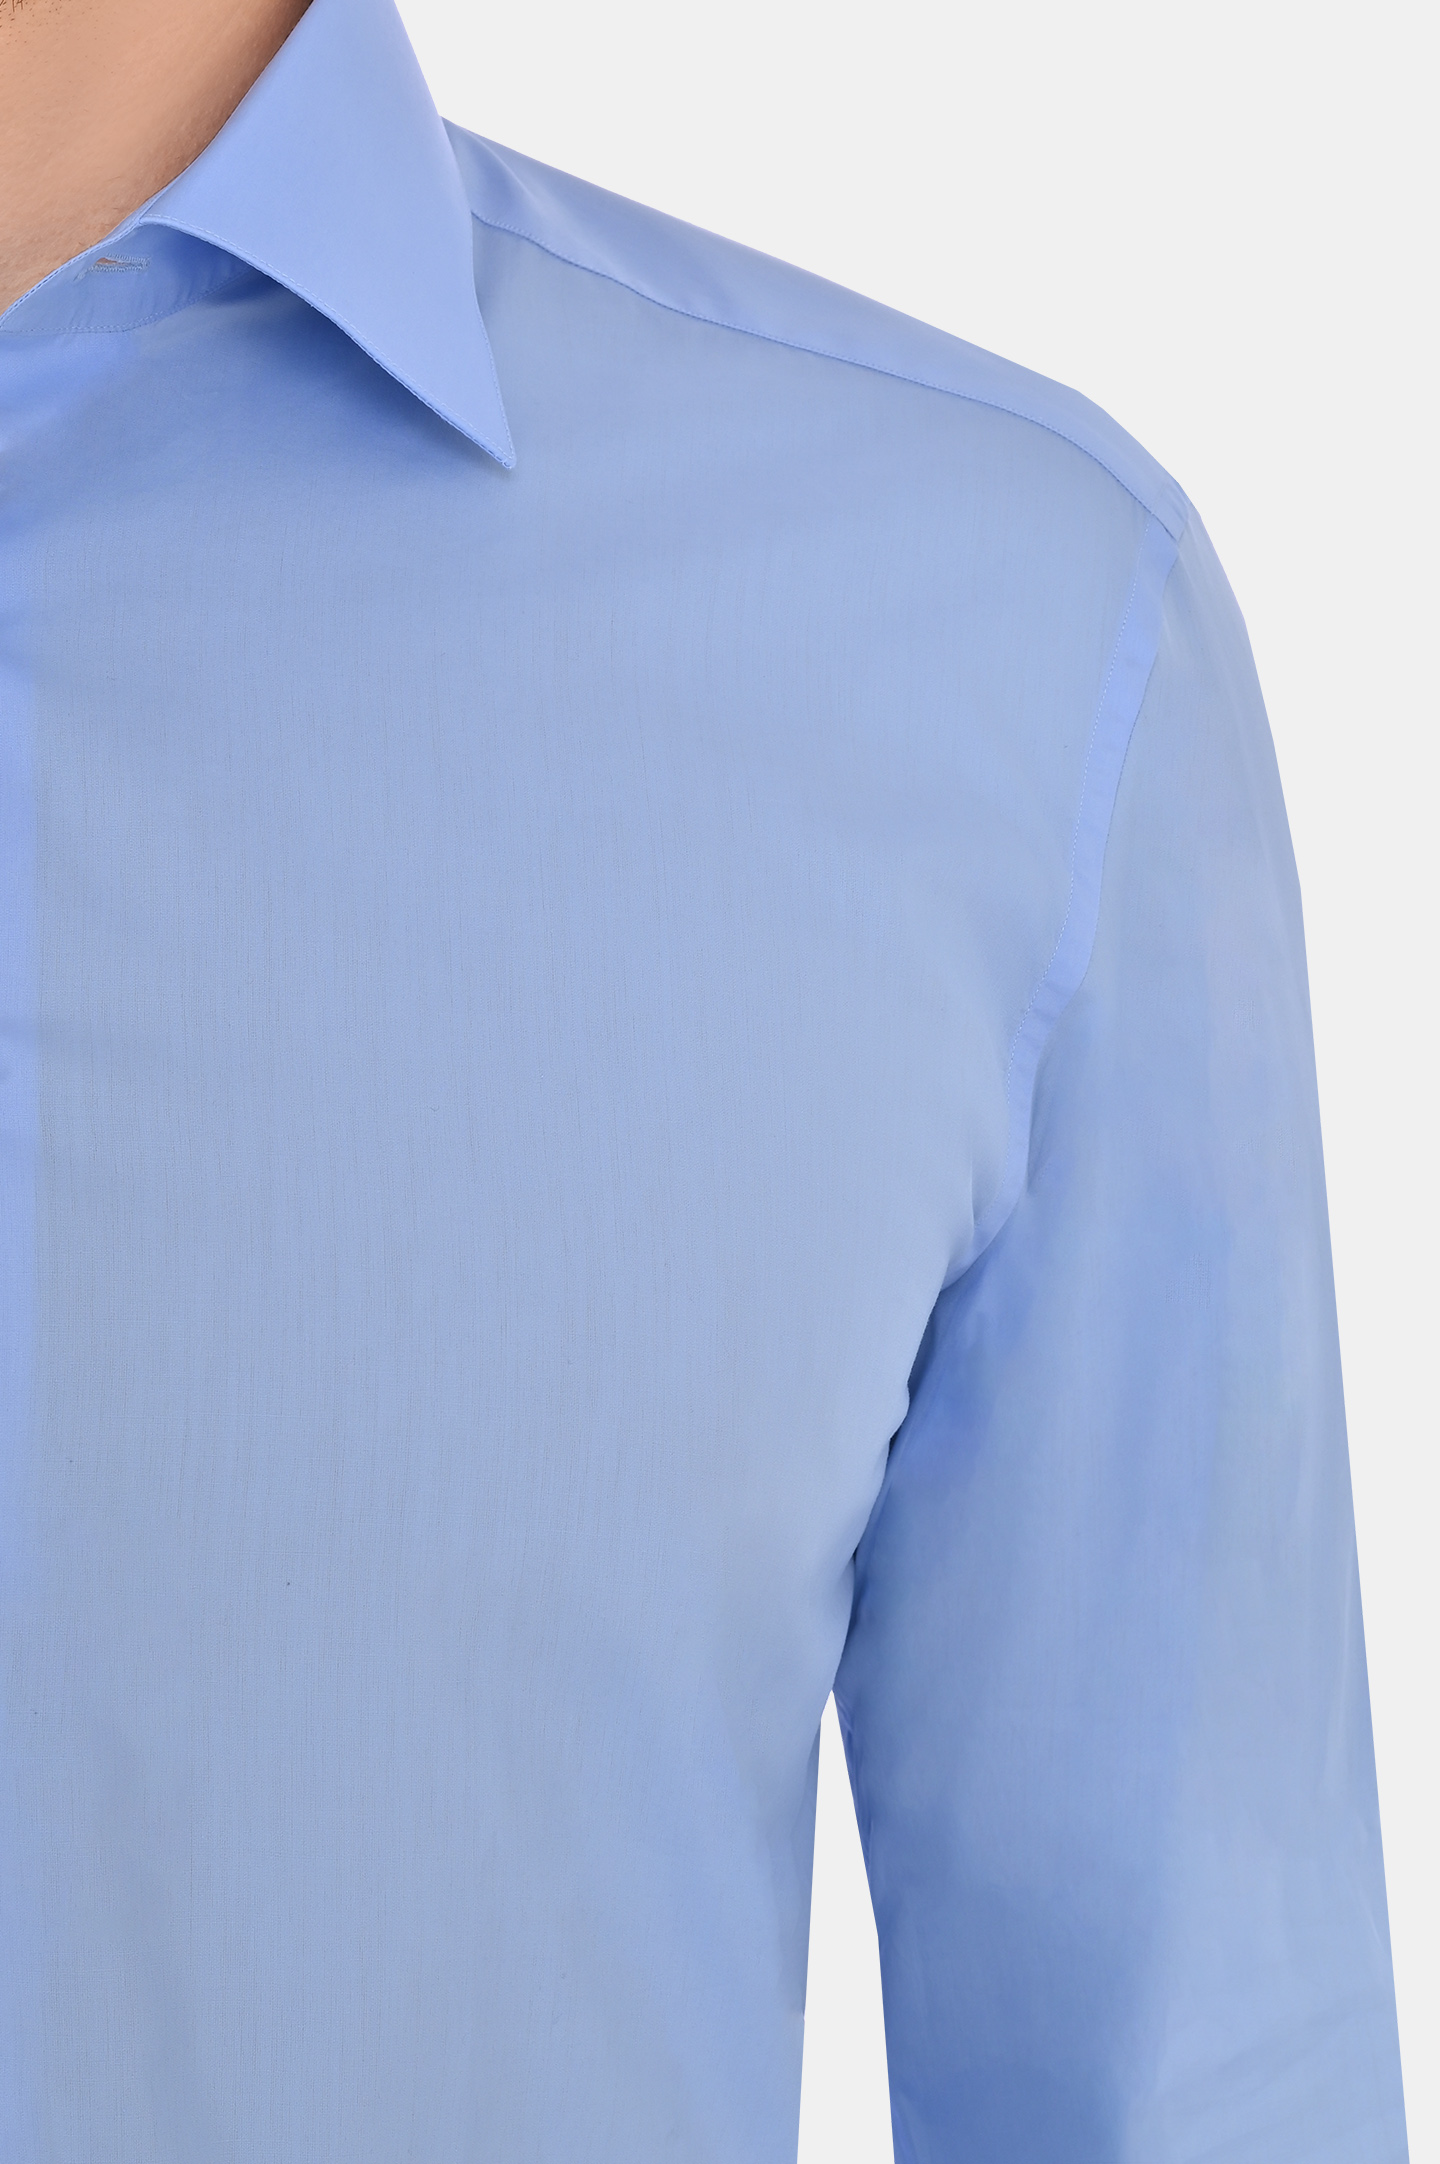 Рубашка STEFANO RICCI MC003678 A304, цвет: Голубой, Мужской